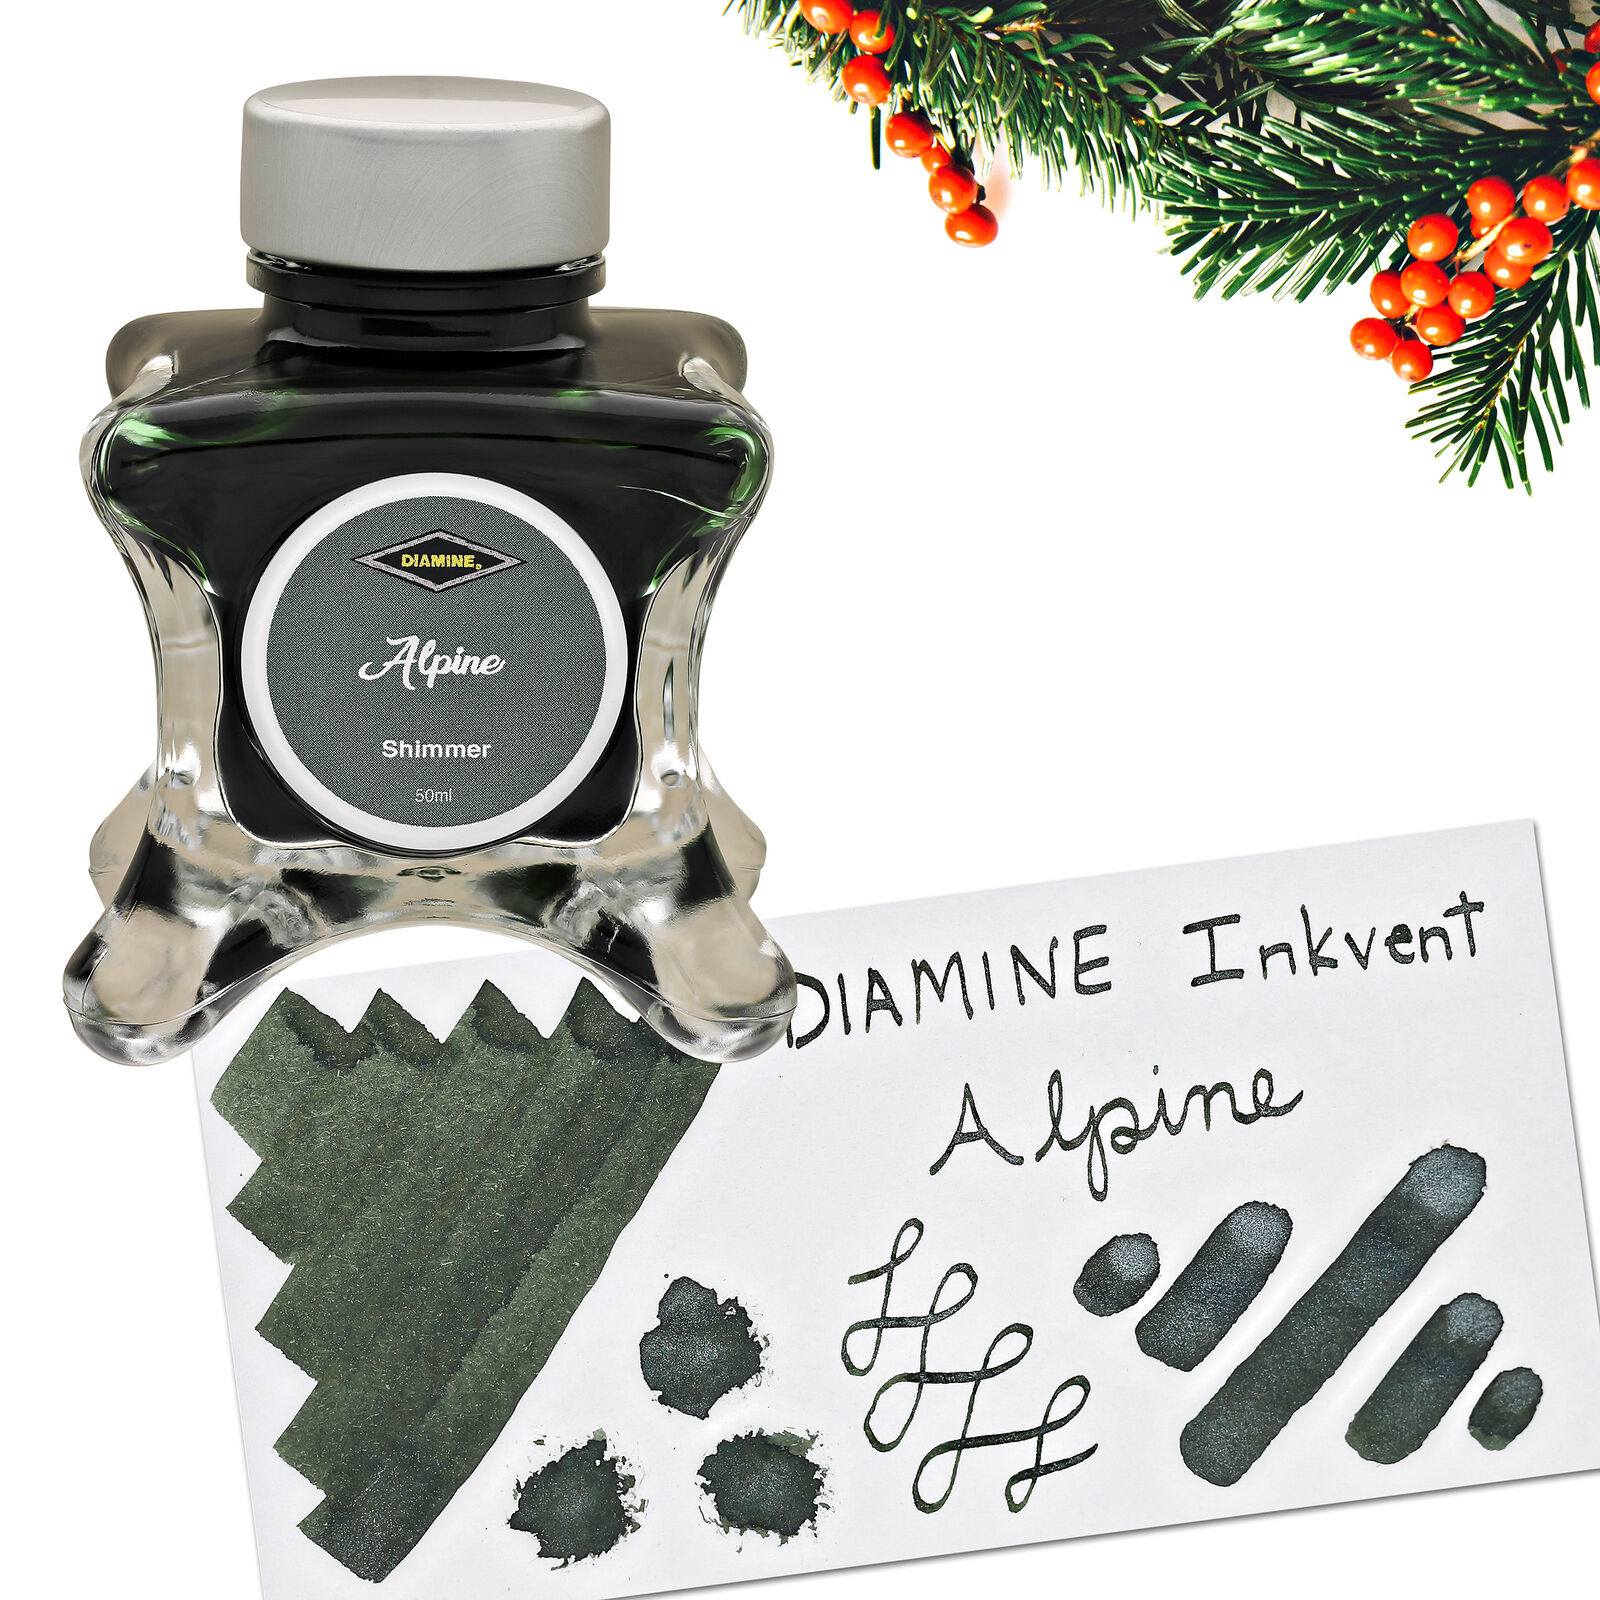 Diamine Inkvent Green Edition Shimmer Bottled Ink in Alpine - 50 mL - NEW